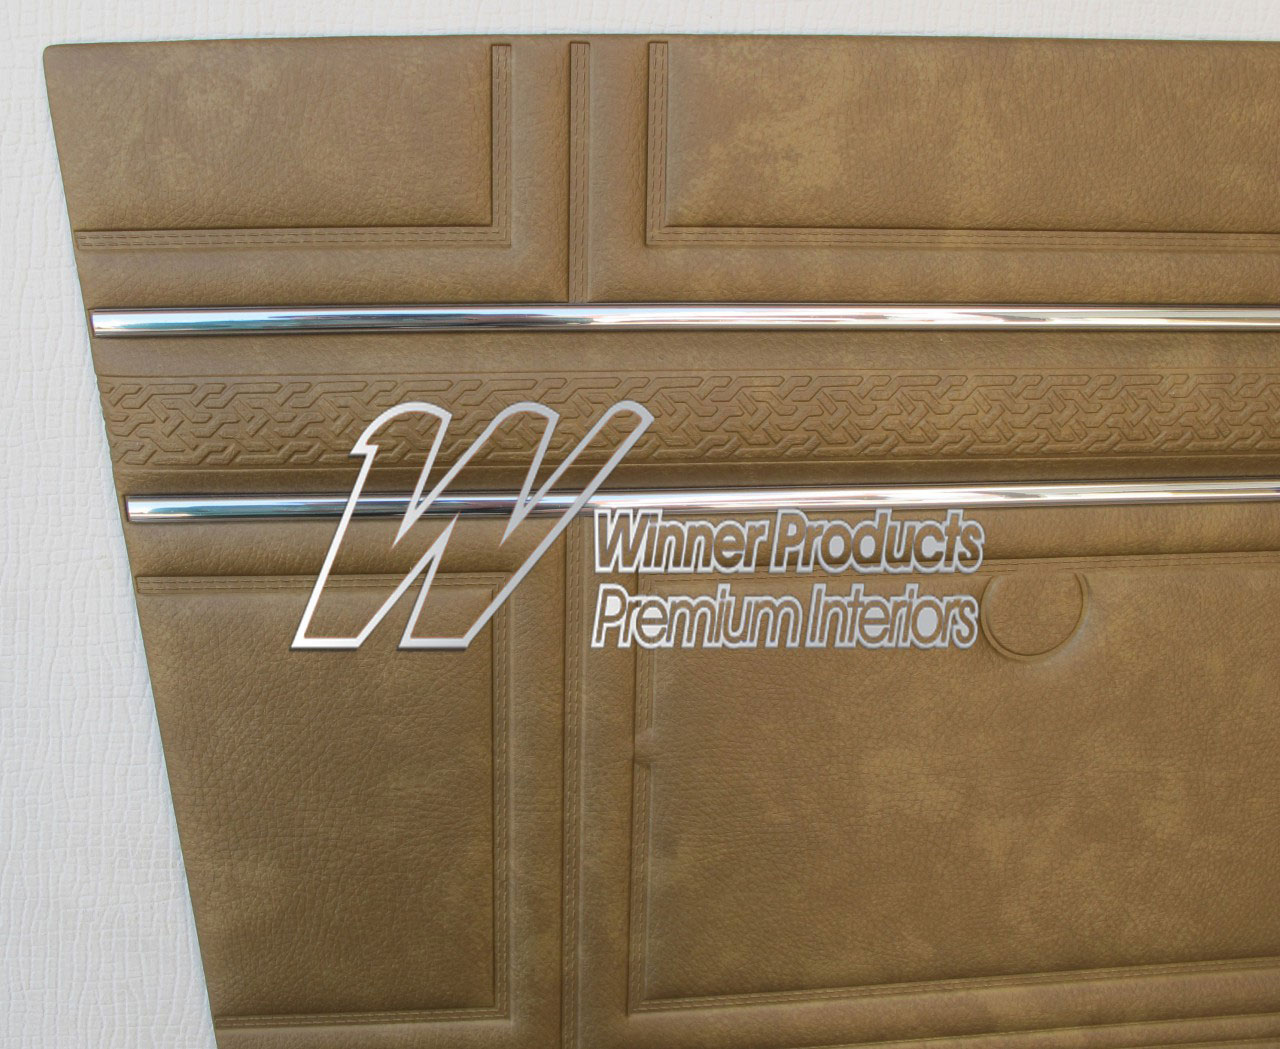 Holden Kingswood HT Kingswood Panel Van 11E Antique Gold Door Trims (Image 3 of 3)